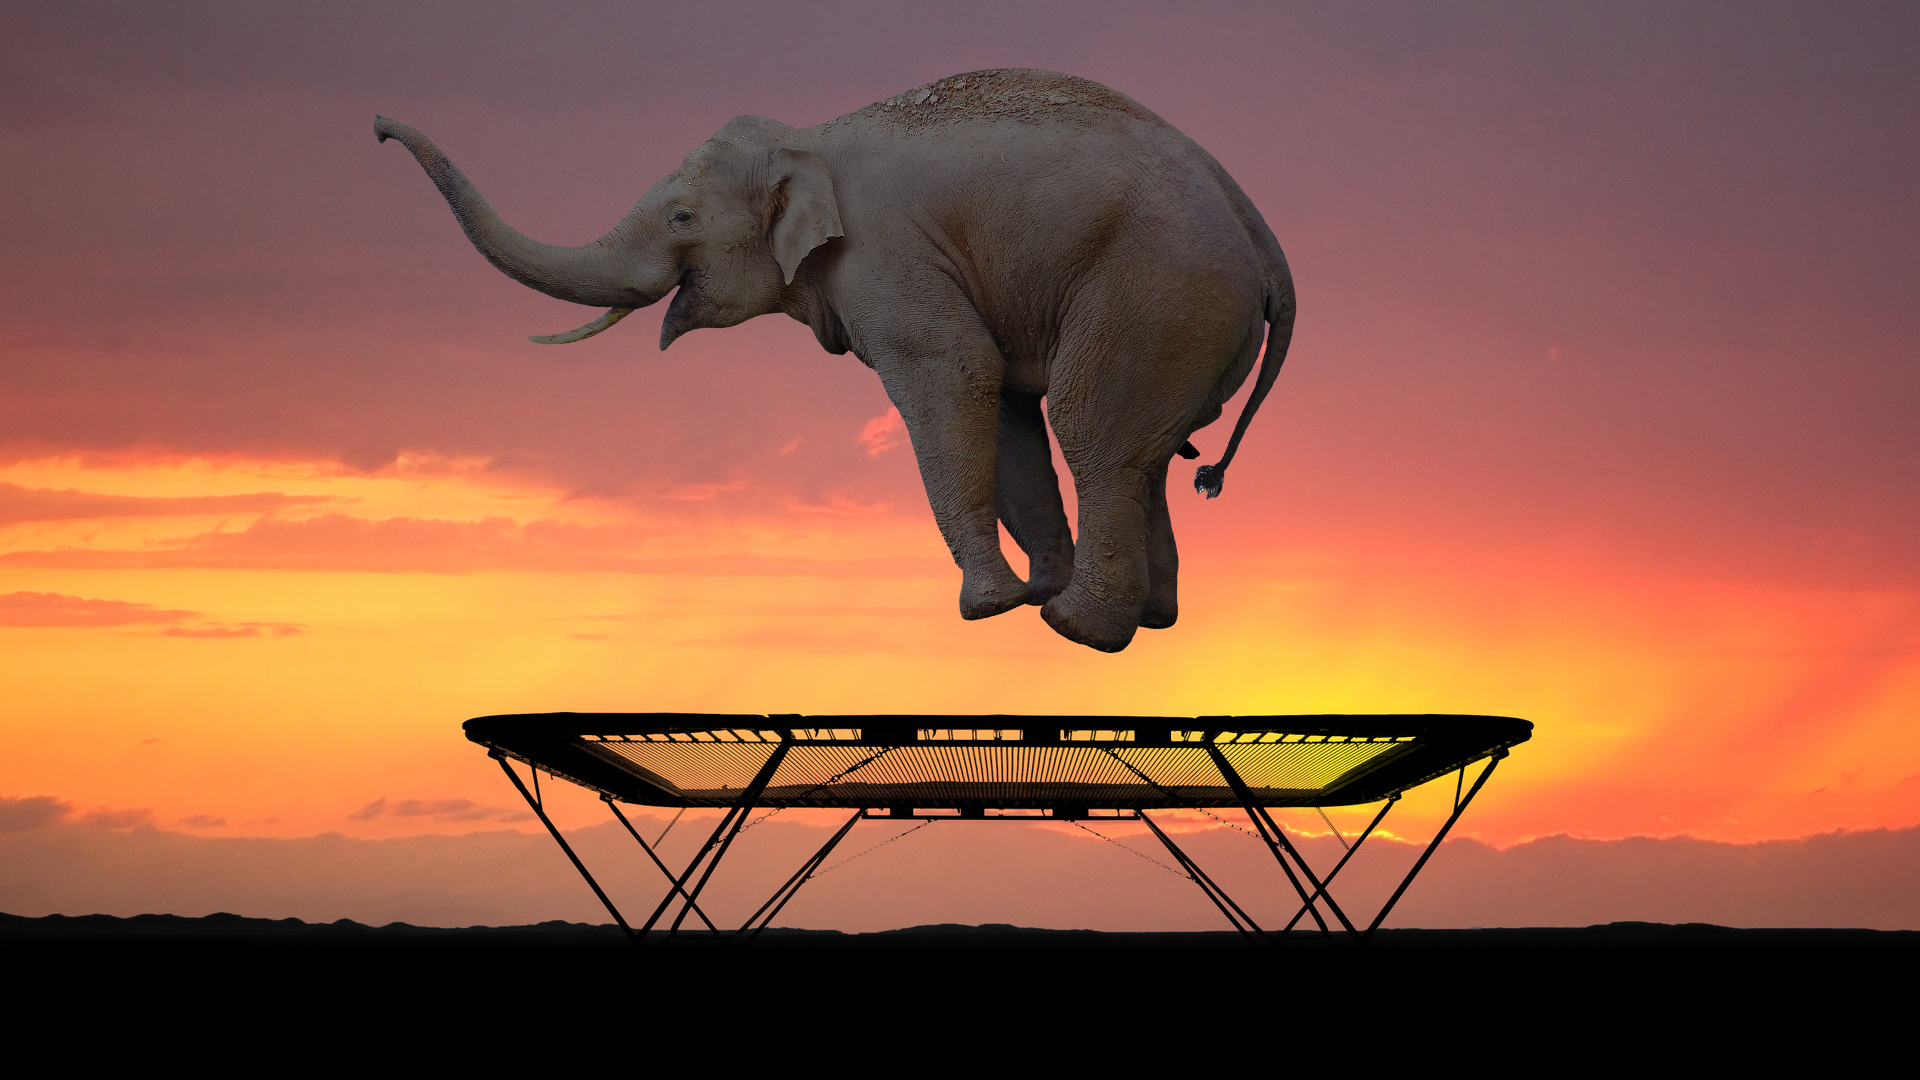 An elephant on a trampoline